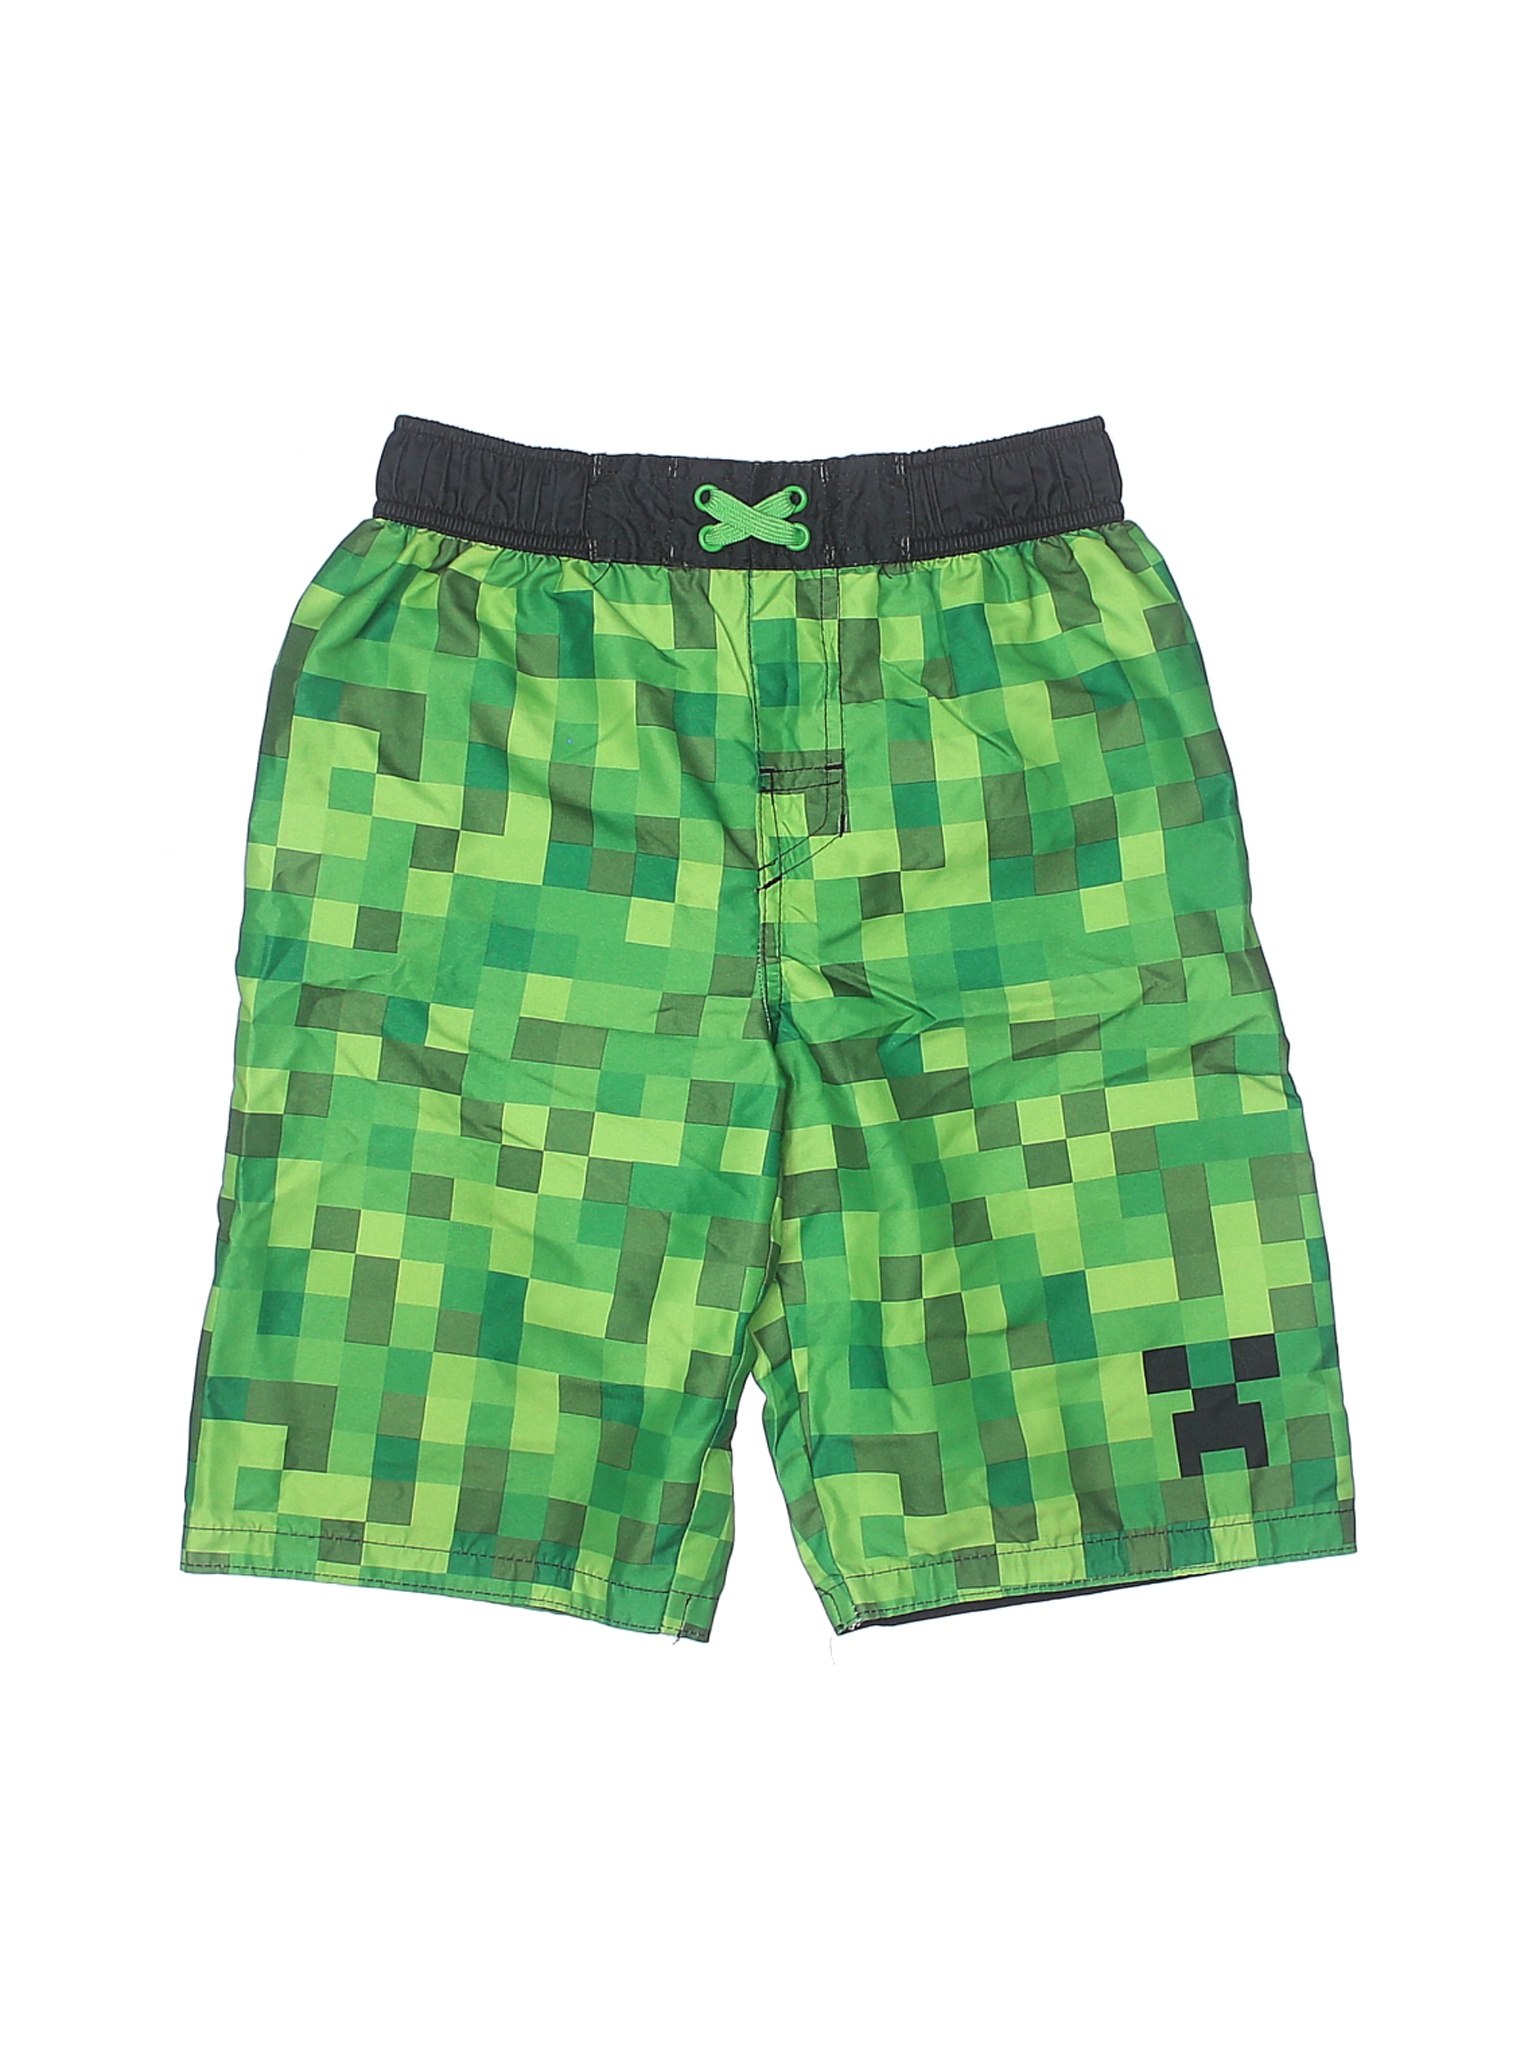 Minecraft Boys Green Board Shorts Large kids | eBay